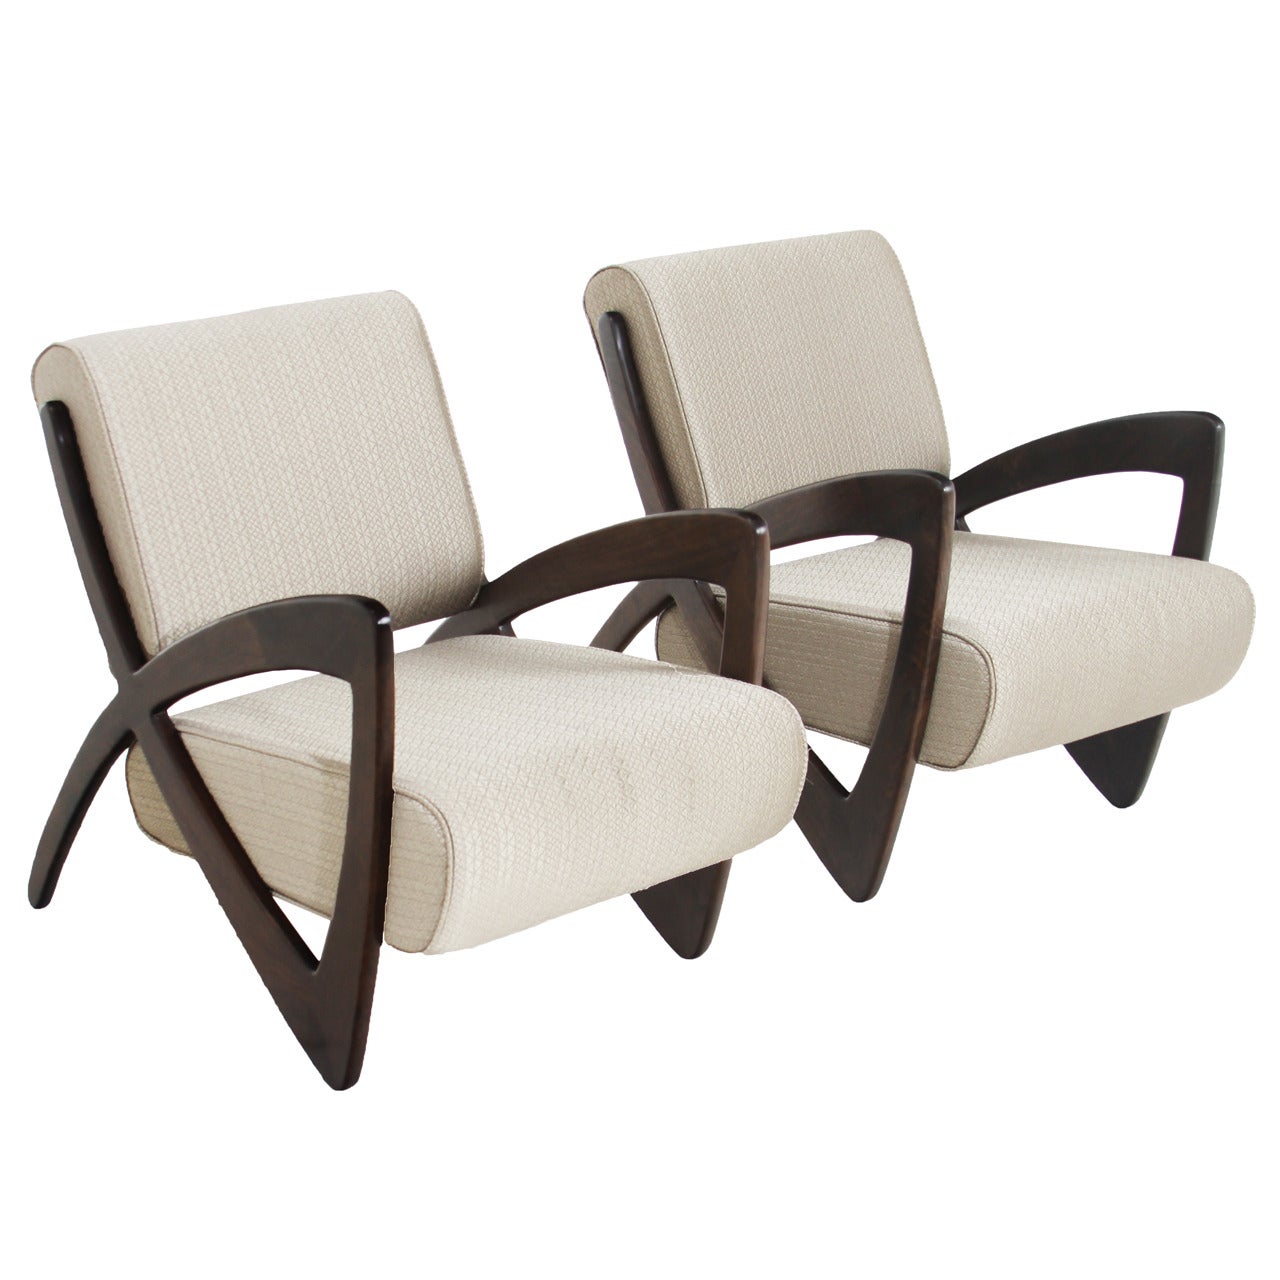 Pair of Custom Infinity Chairs by Thomas Hayes Studio